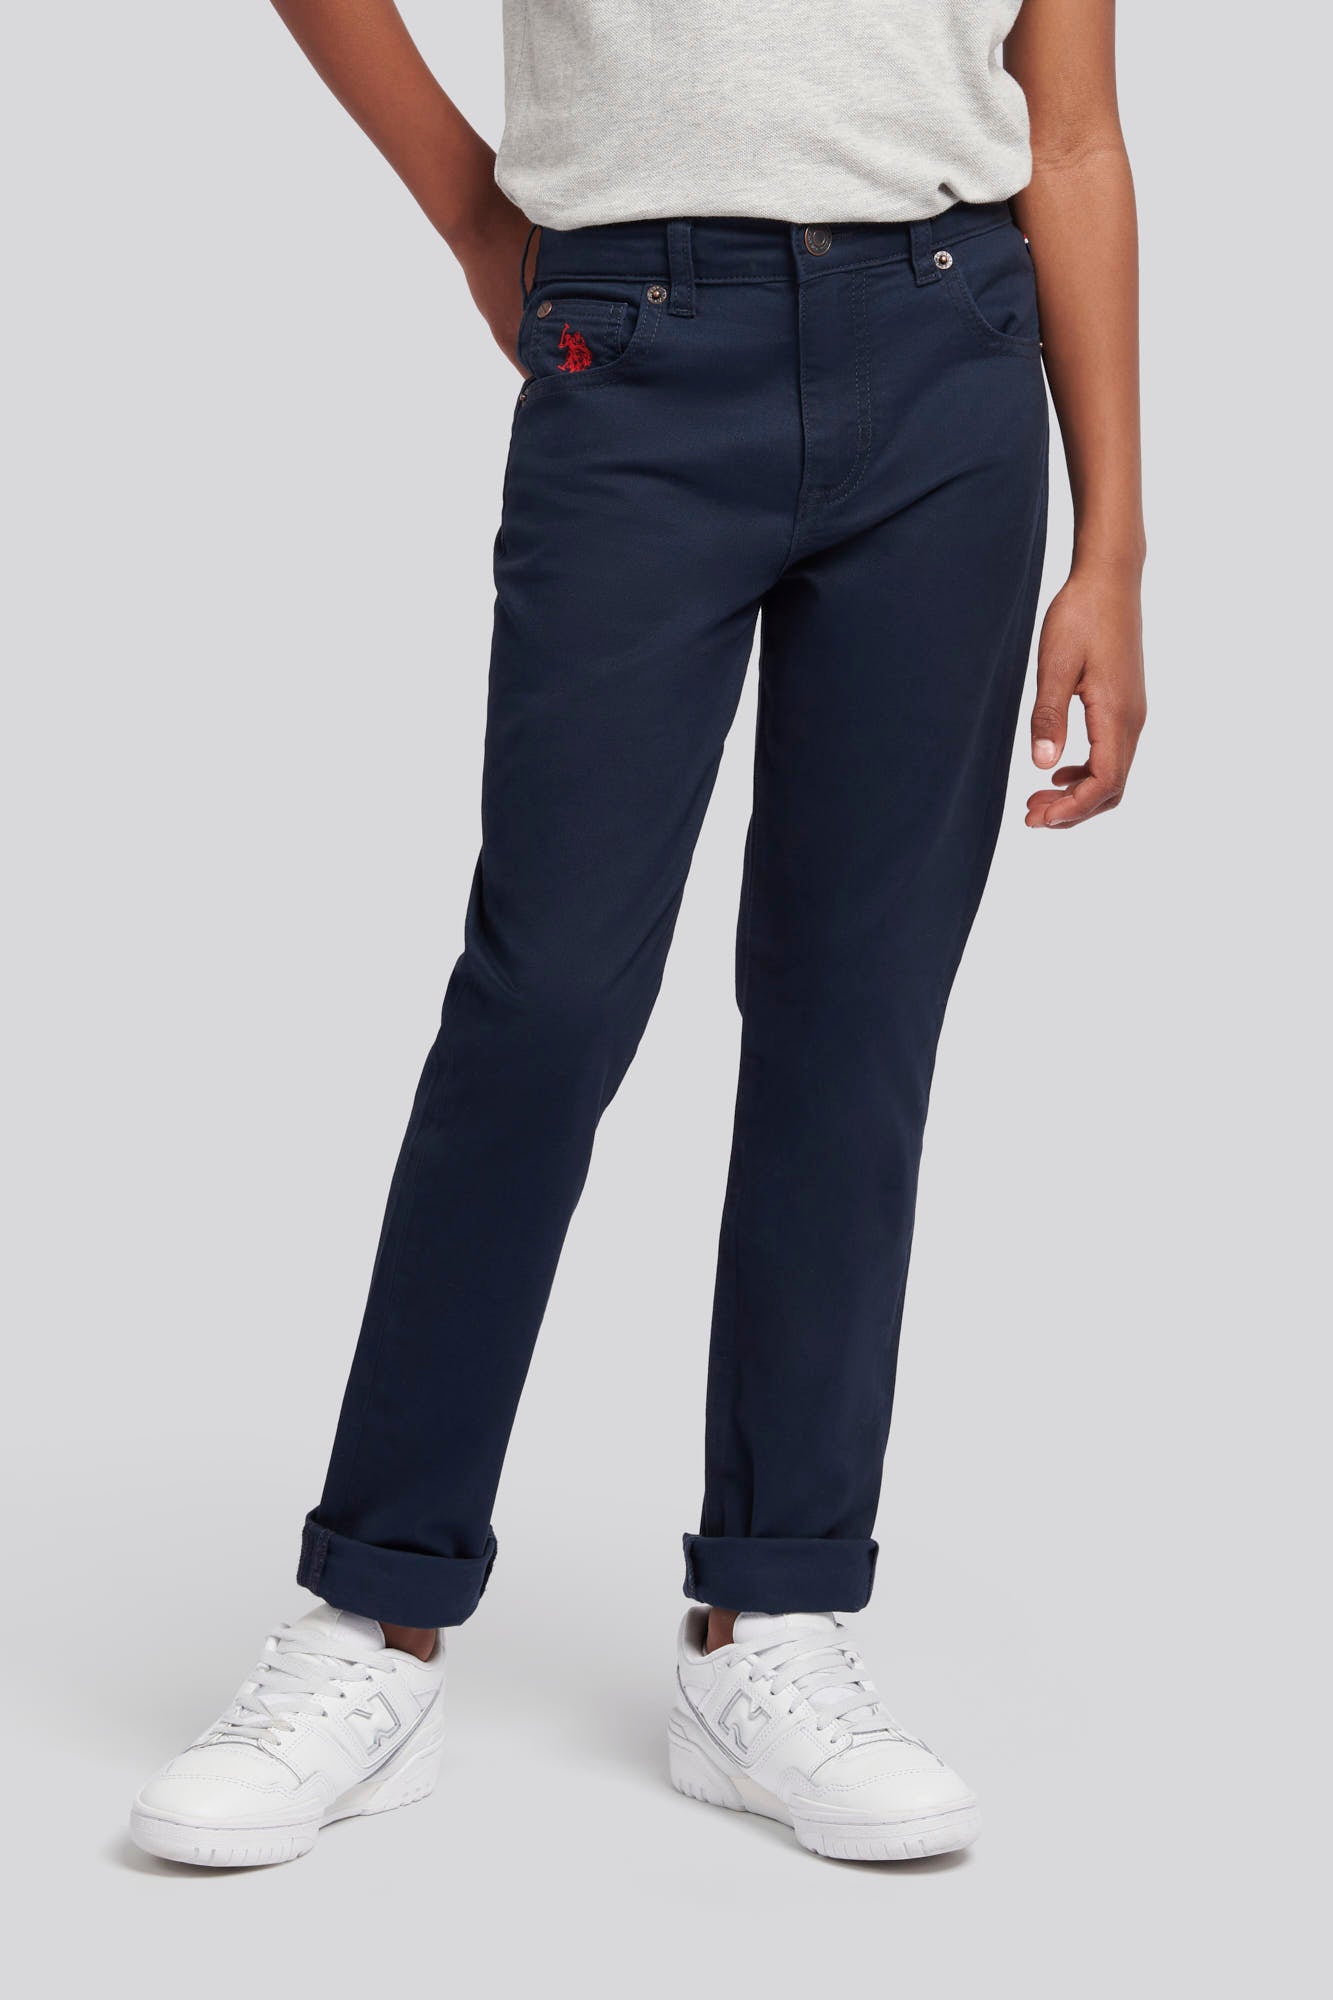 U.S. Polo Assn. Boys 5 Pocket Trouser in Dark Sapphire Navy / Moonlight Blue DHM